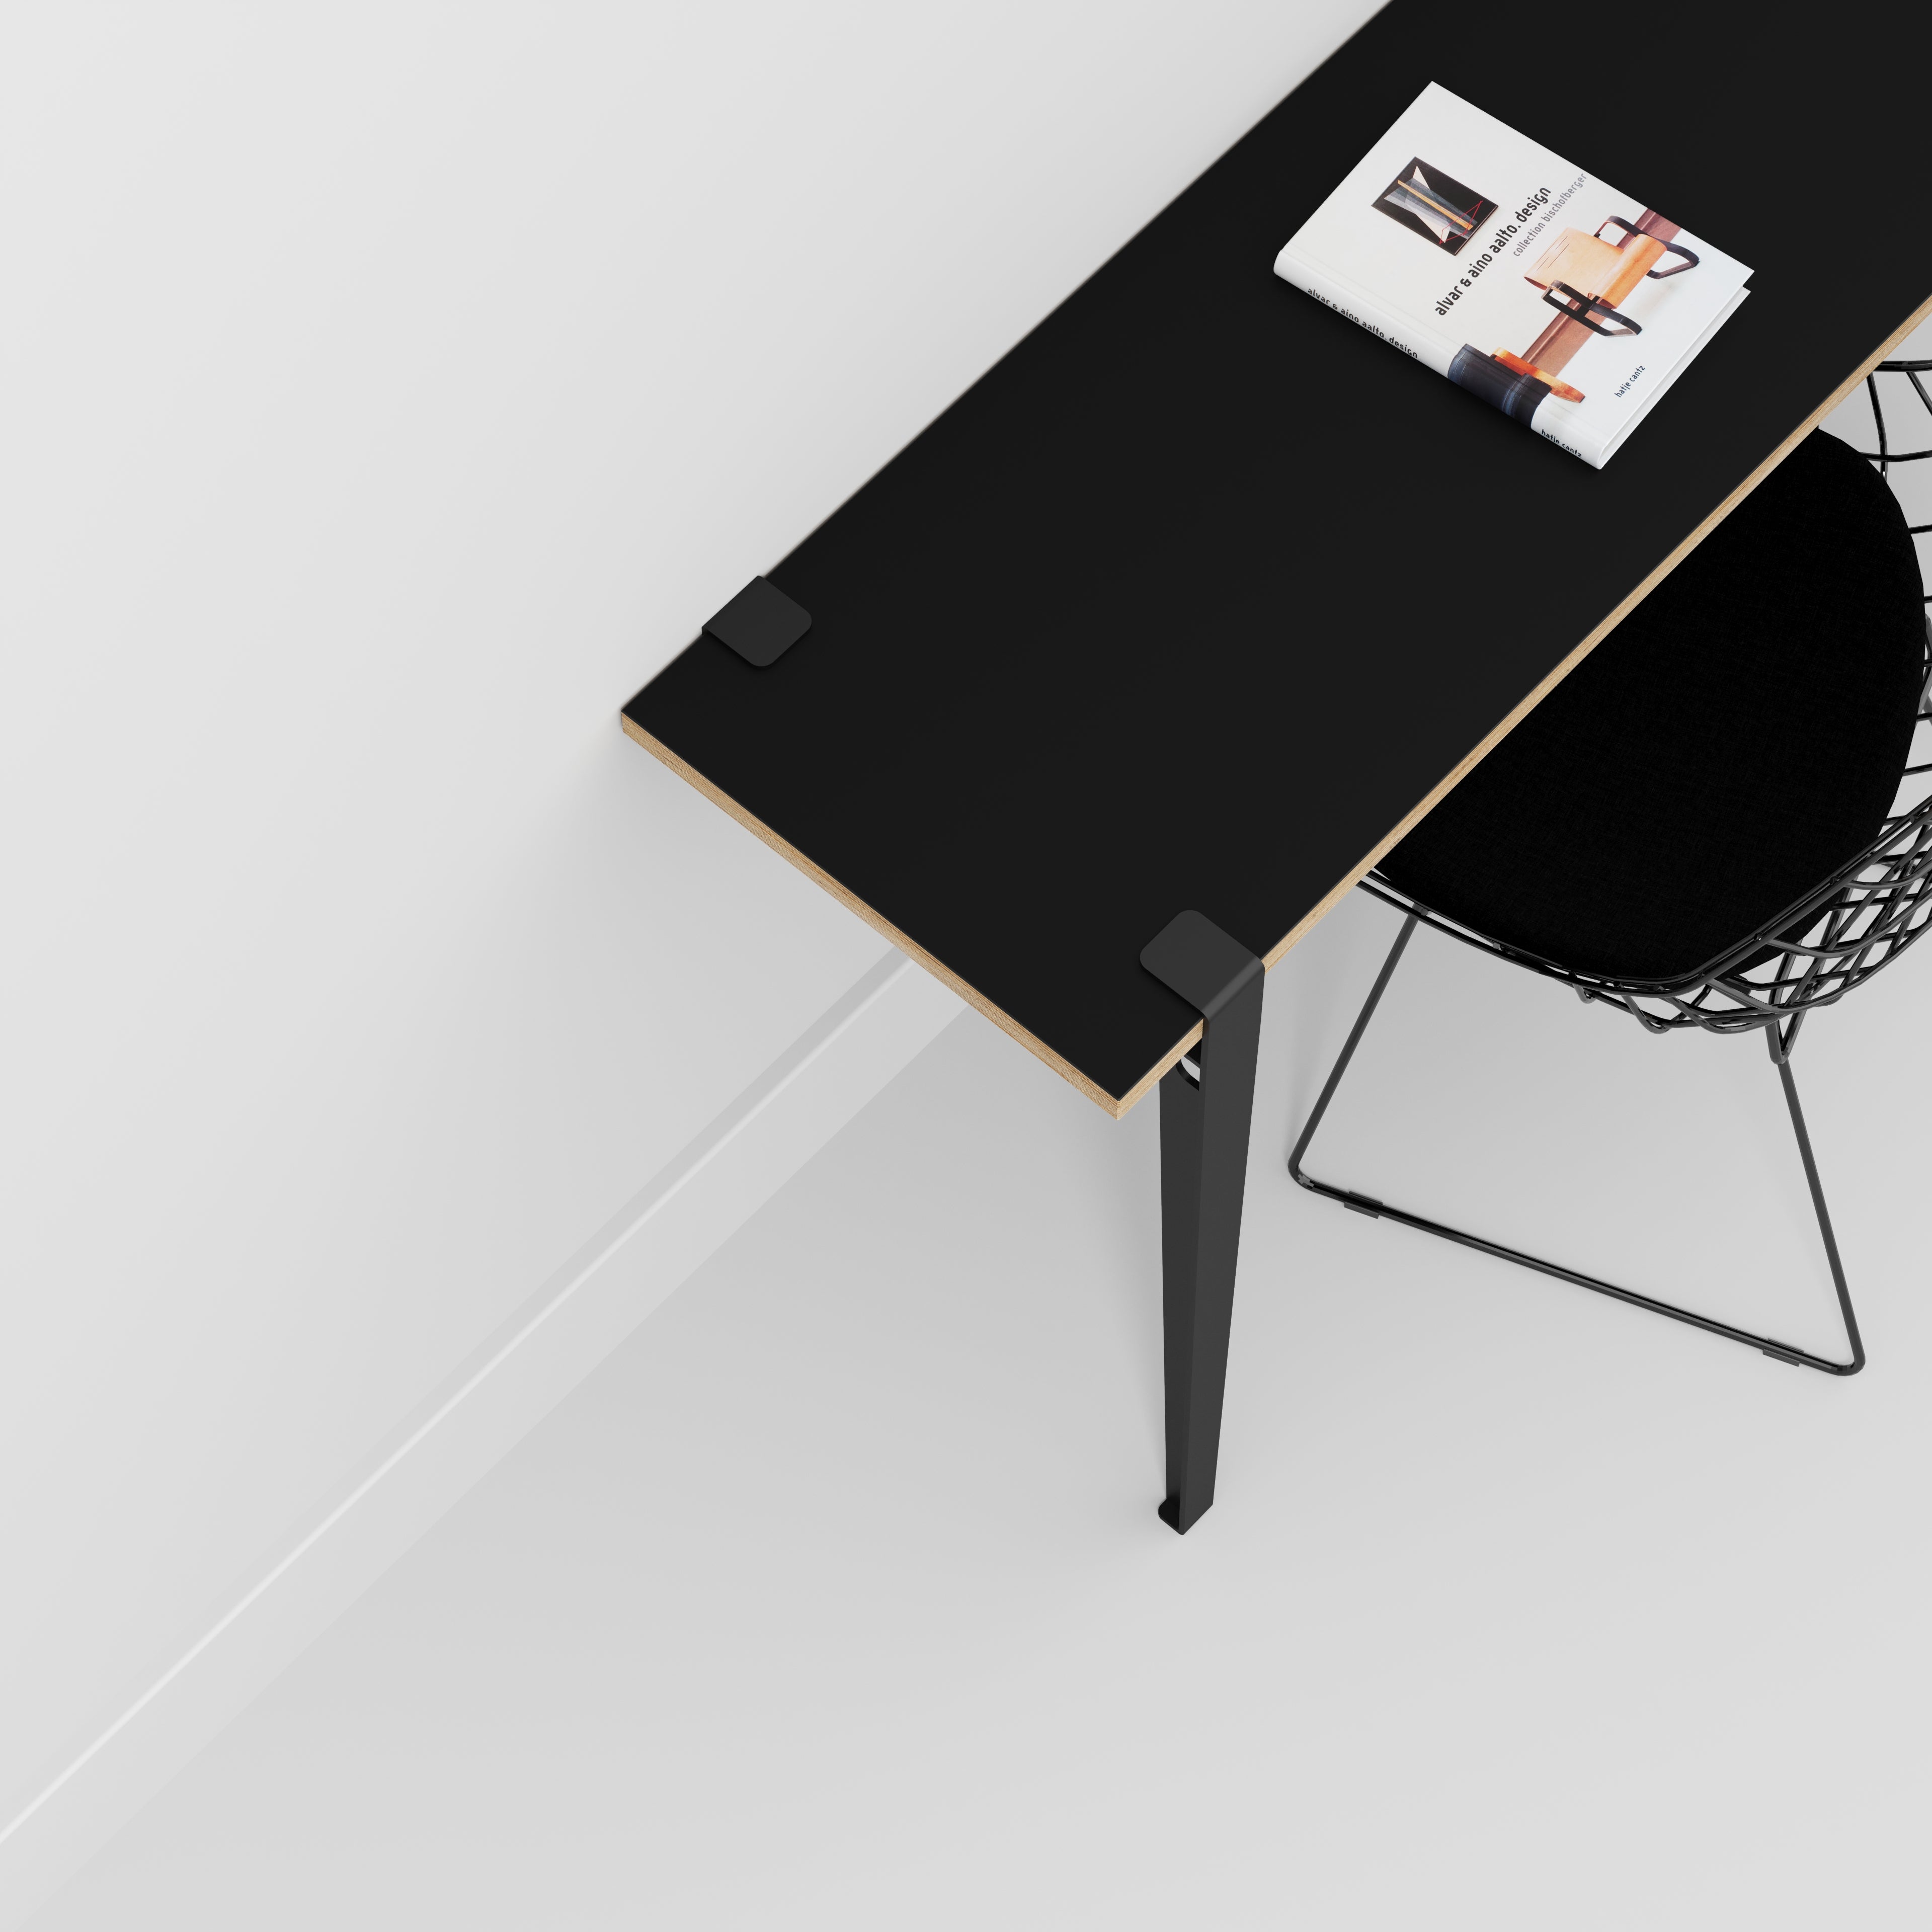 Wall Desk with Black Tiptoe Legs and Brackets - Formica Diamond Black - 1200(w) x 400(d) x 750(h)